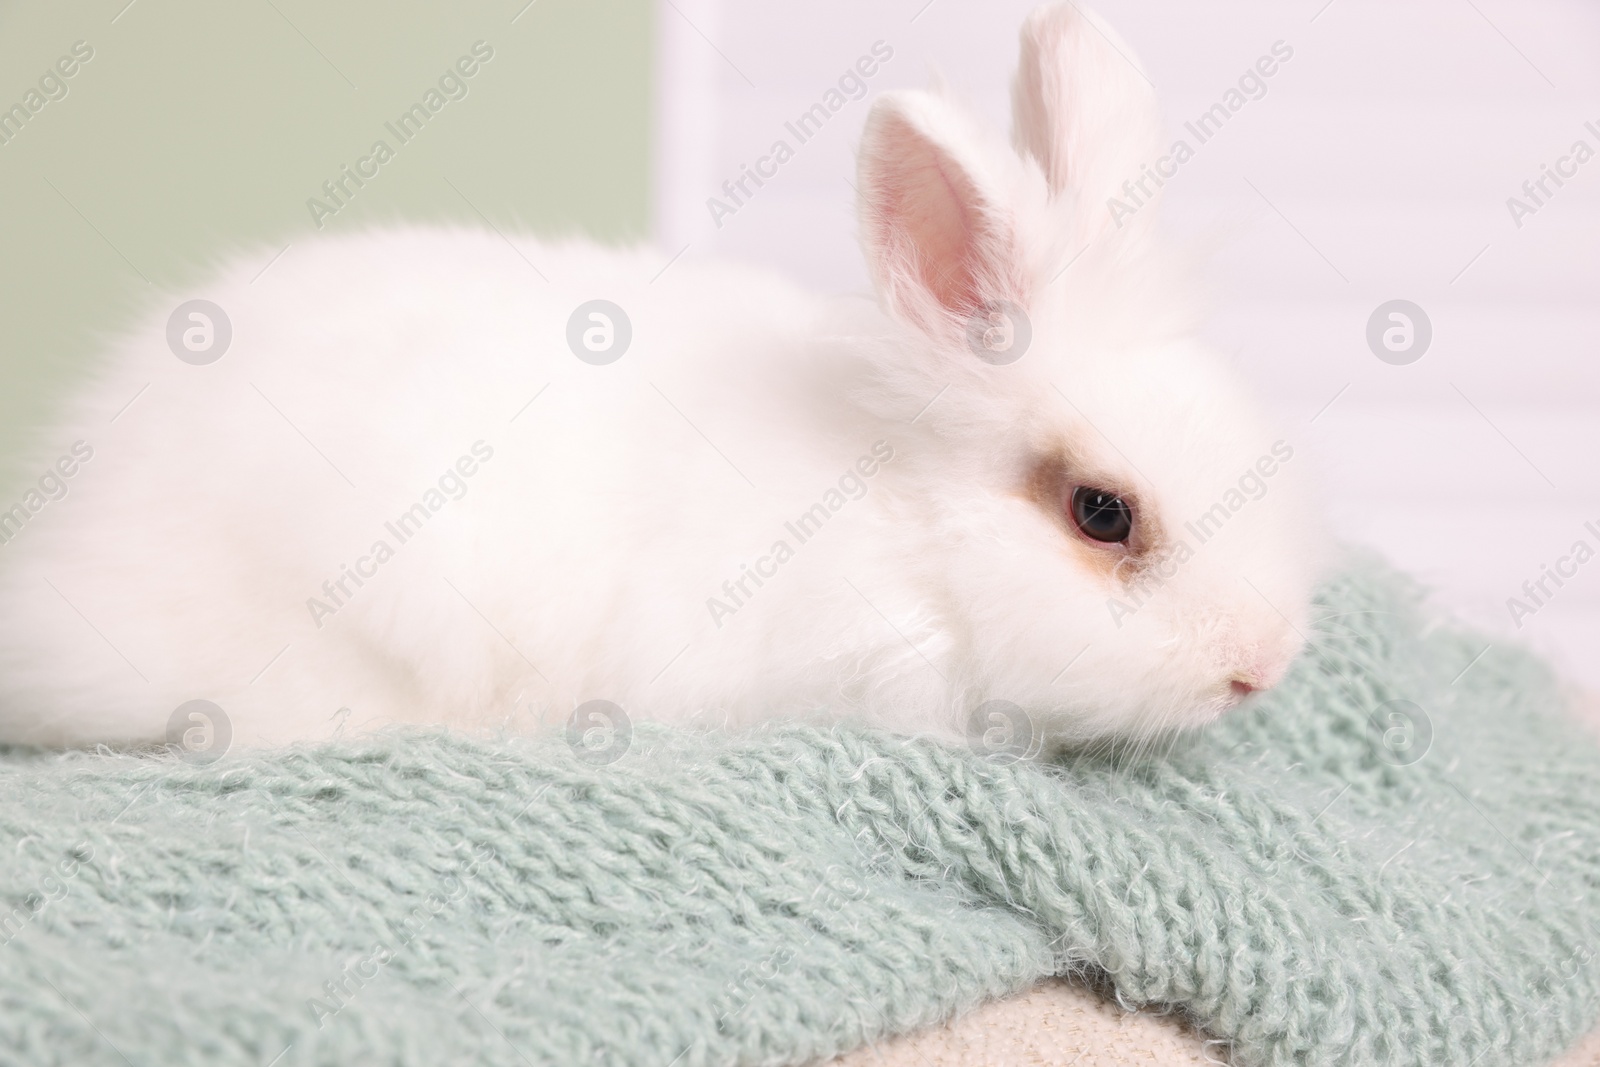 Photo of Fluffy white rabbit on soft blanket. Cute pet